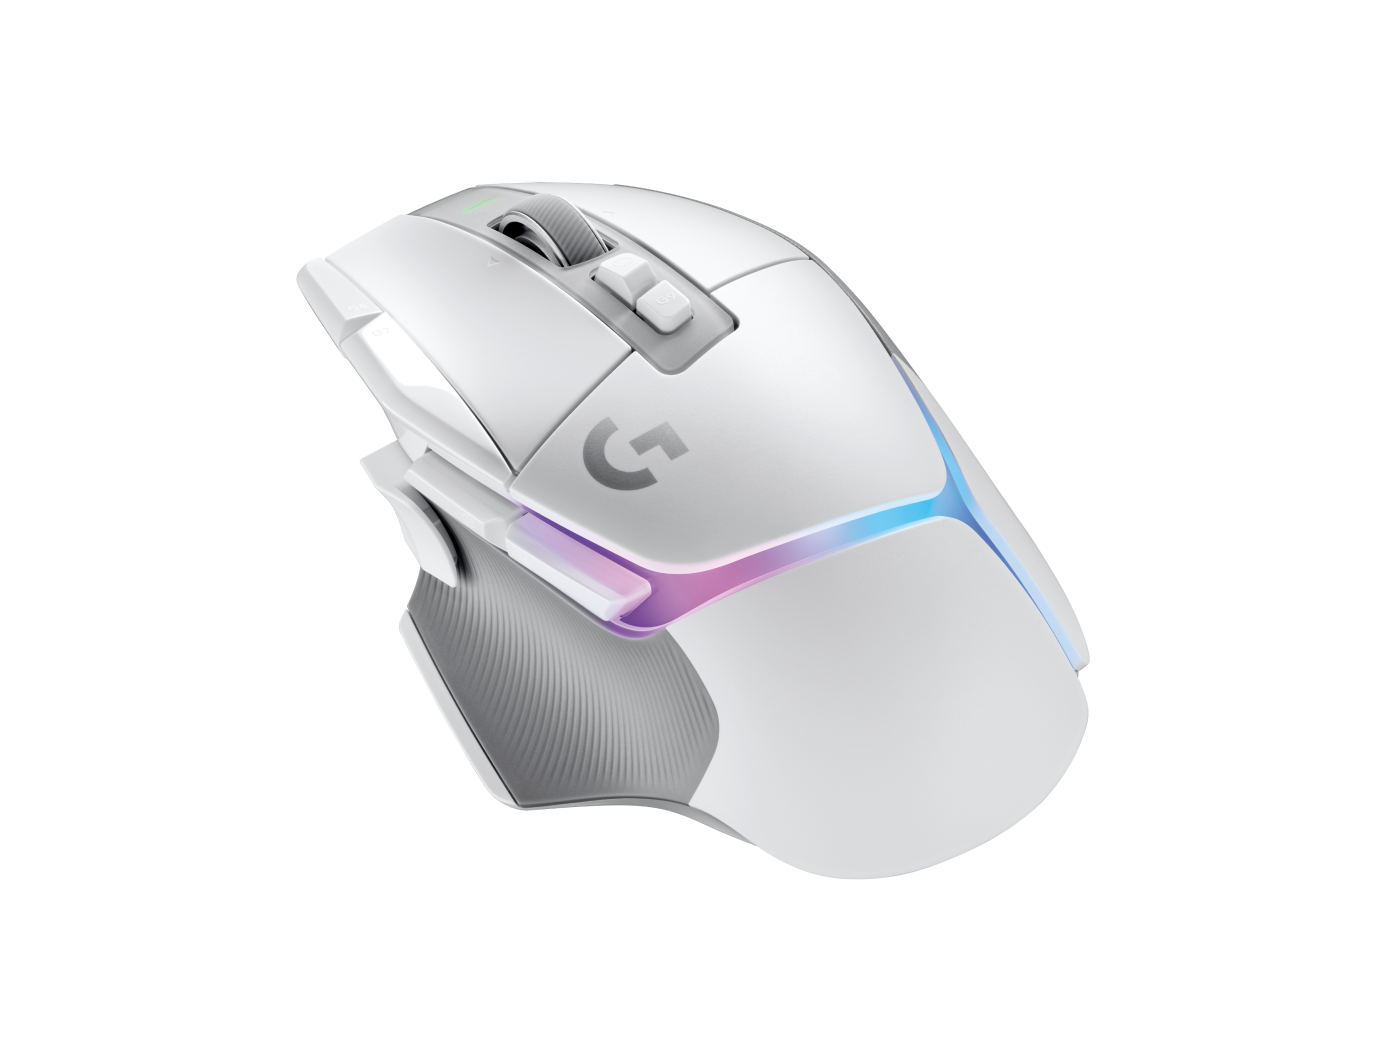 G502 X Plus Wireless RGB Gaming Mouse | Logitech G